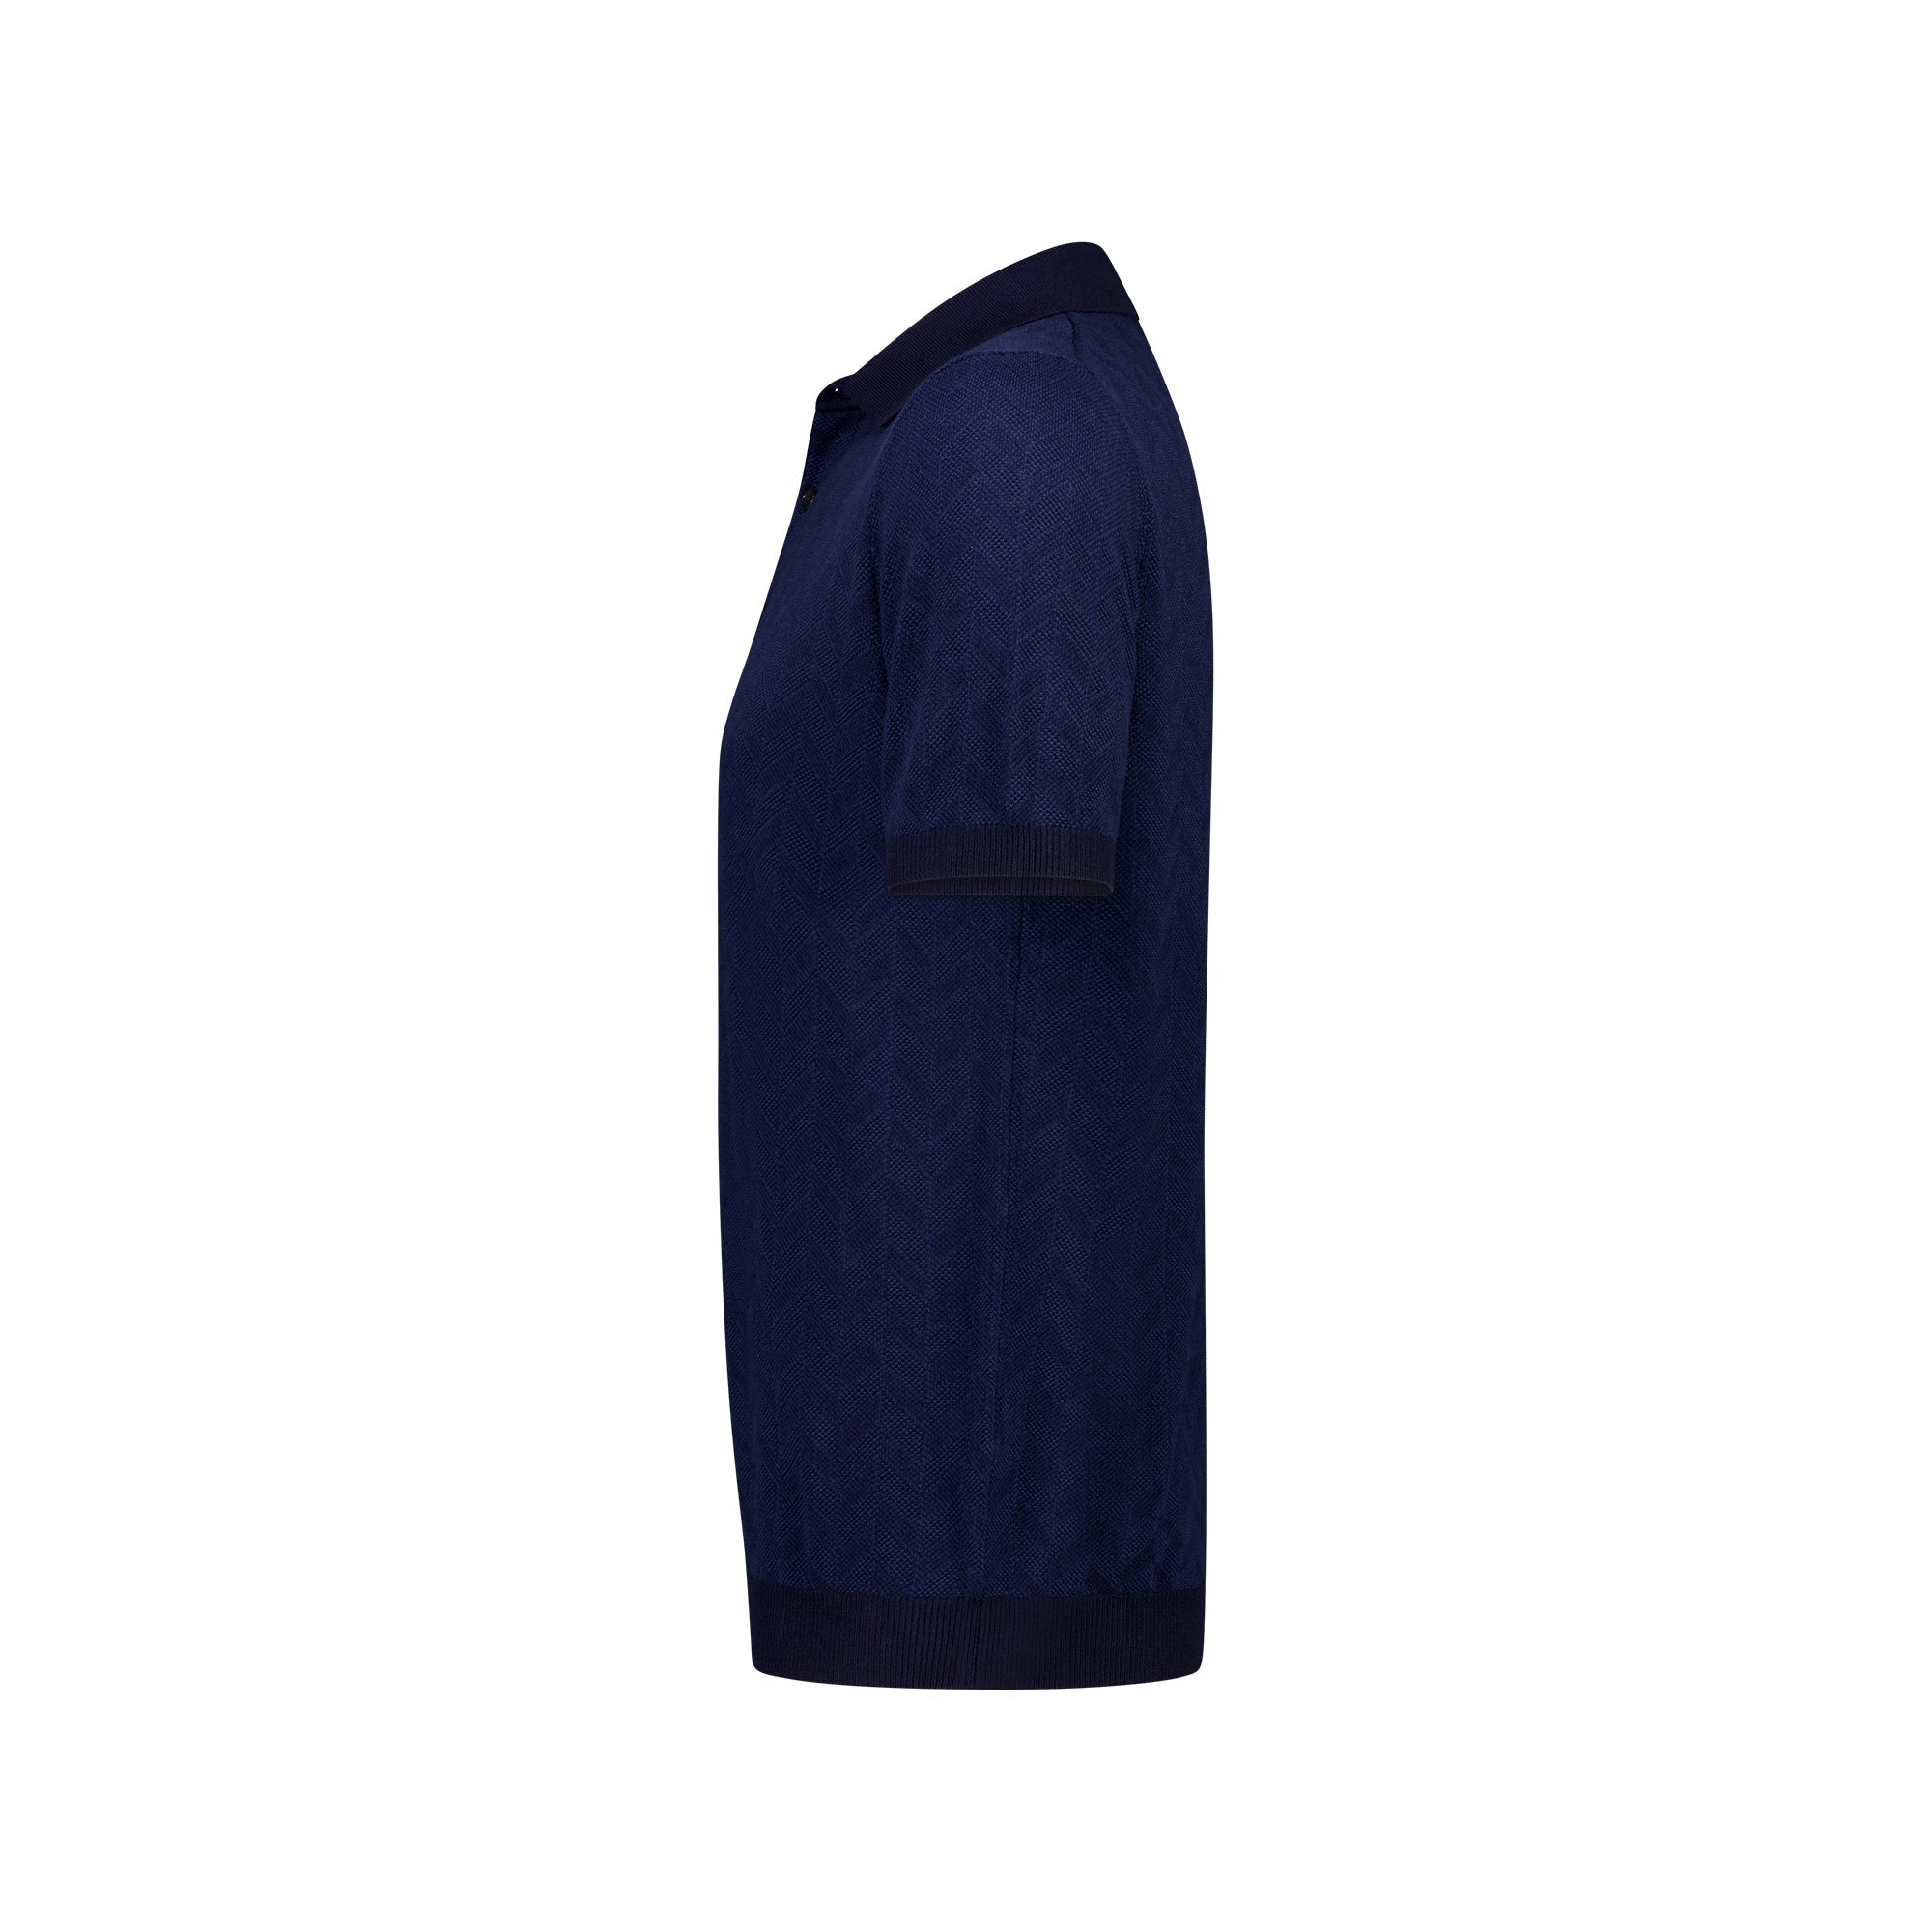 MCKINNON x FERRANTE Knitted Cotton Polo in NAVY BLUE - Henry BucksShirts38SS230089 - NVBL - 50